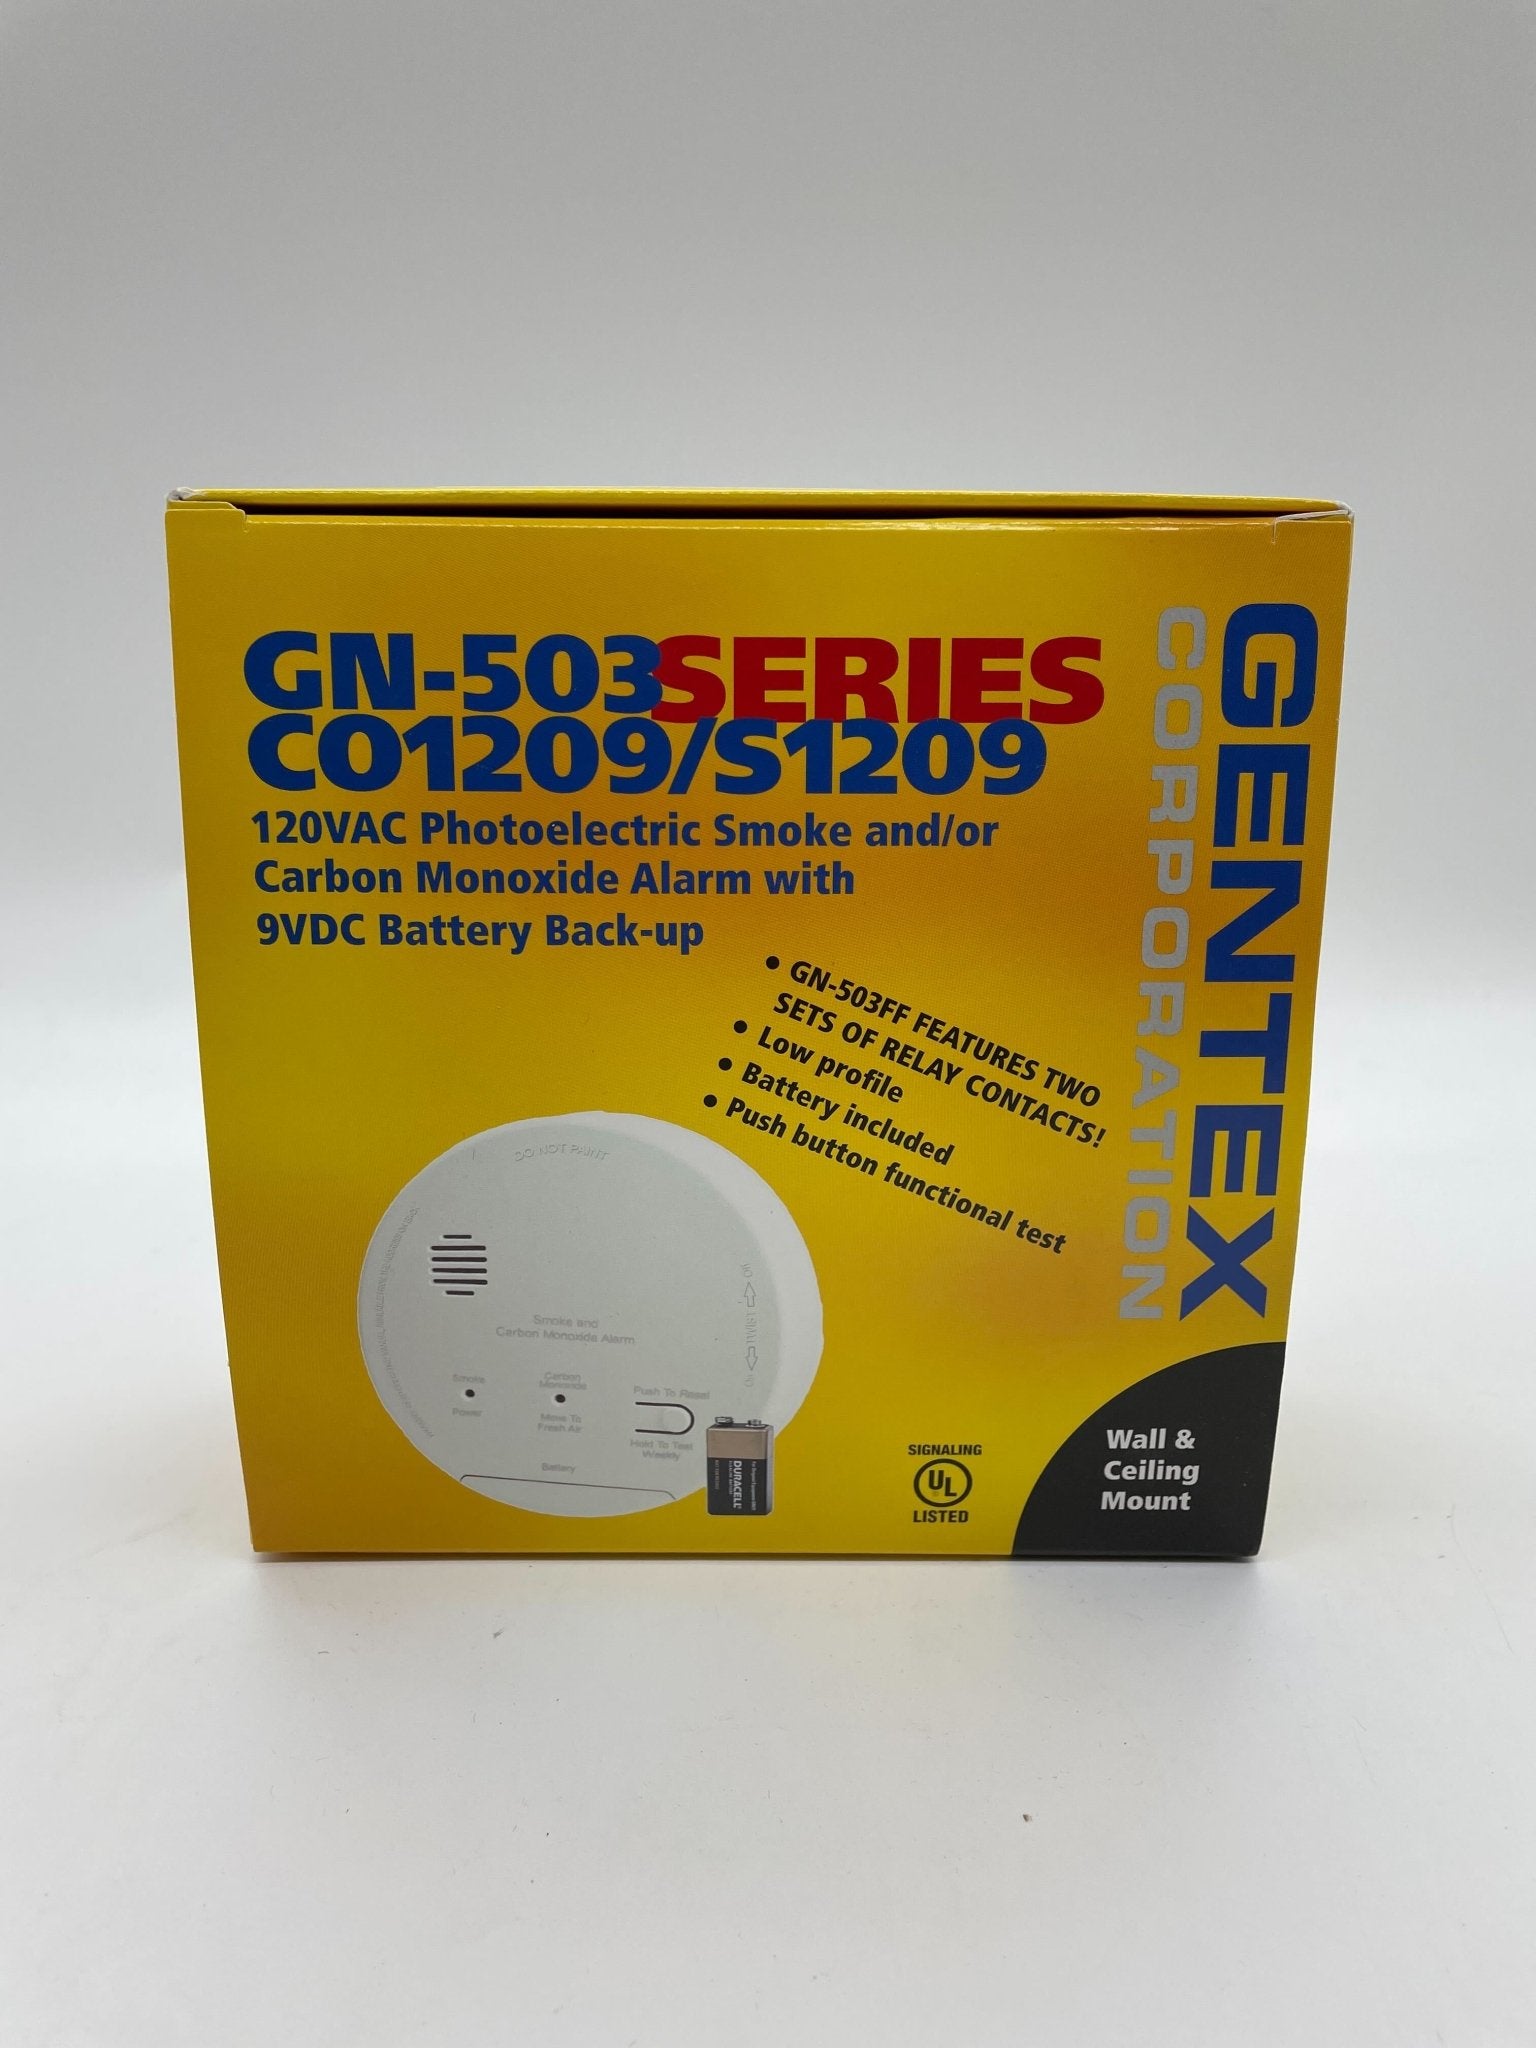 Gentex GN-503F - The Fire Alarm Supplier